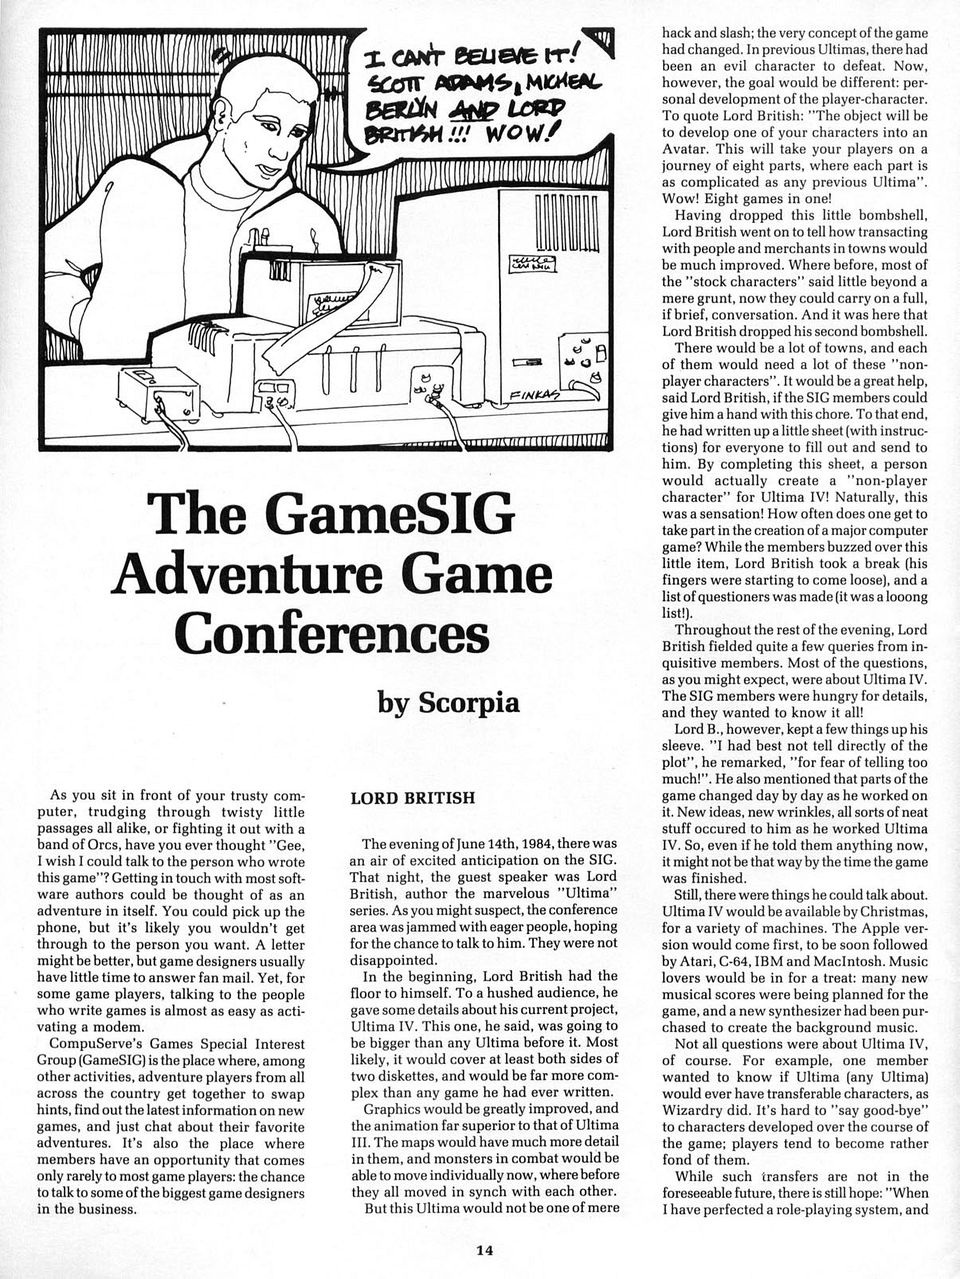 The GameSIG Adventure Game Conferences